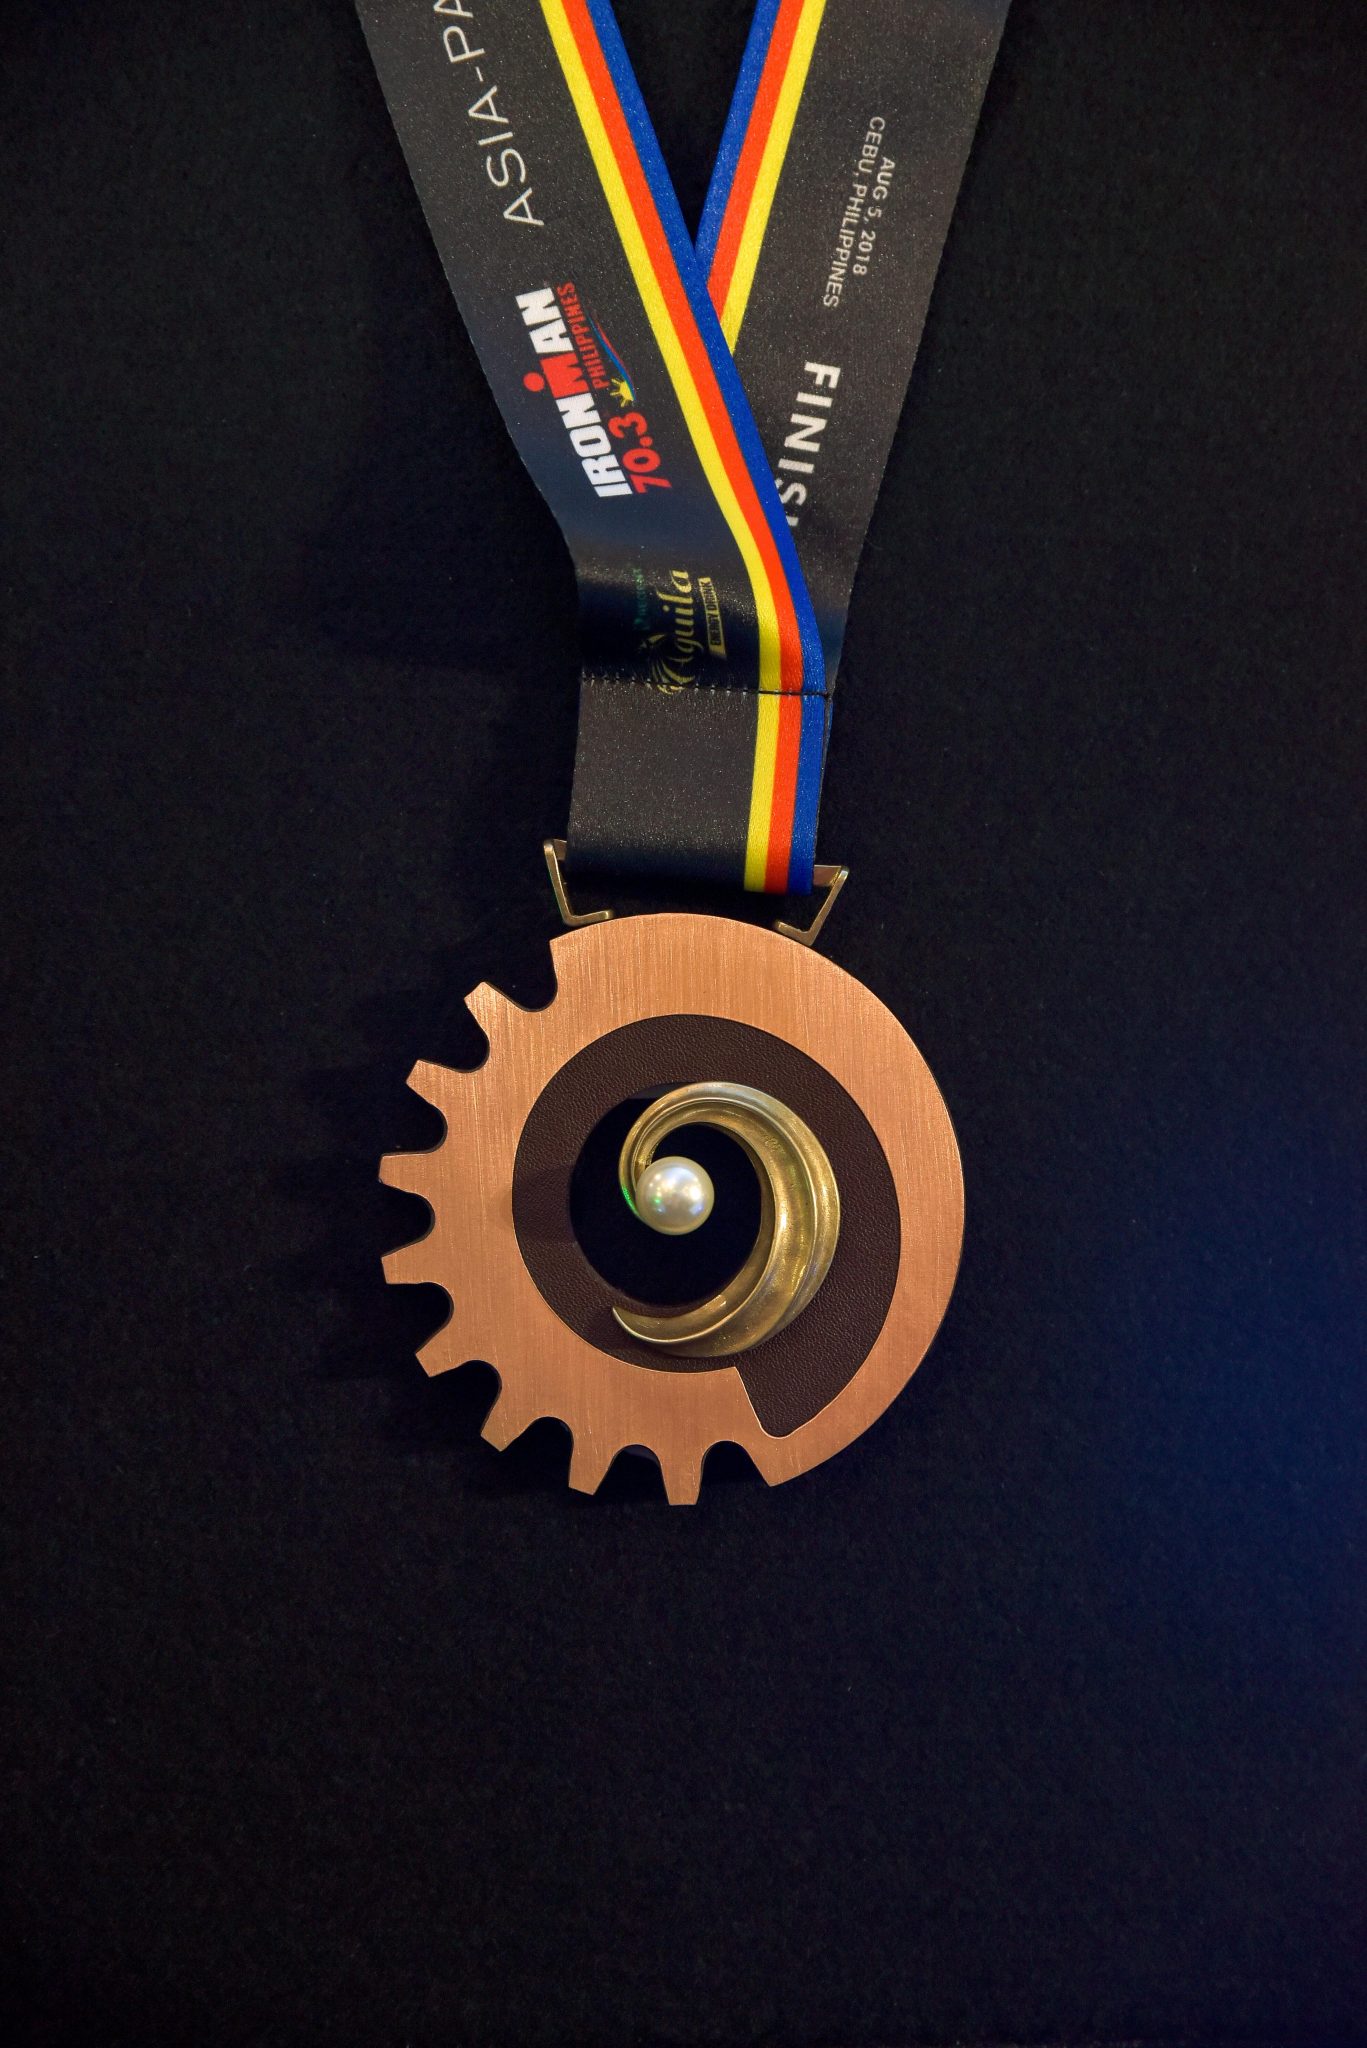 The finisher medal aptly called Perlas ng Silanganan